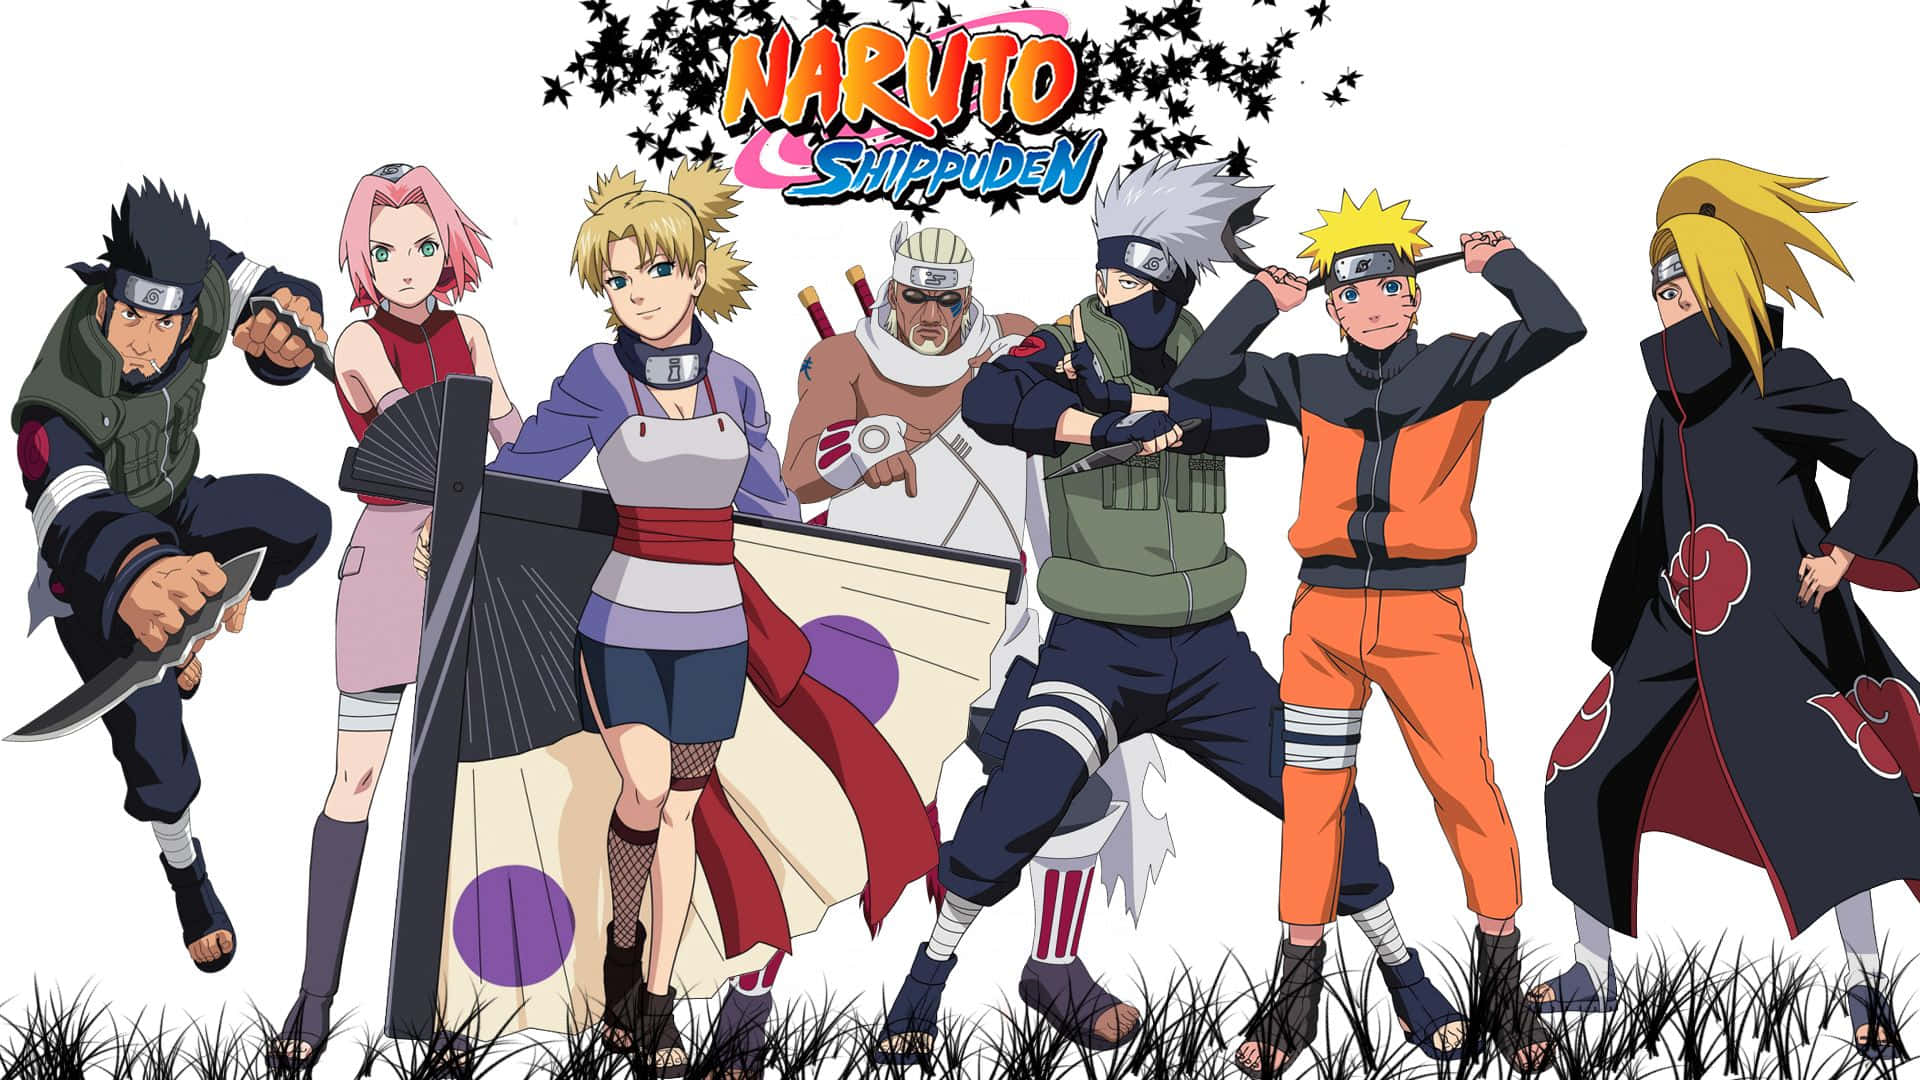 Narutoshippuden Manga Anime Poster Kunst Wallpaper